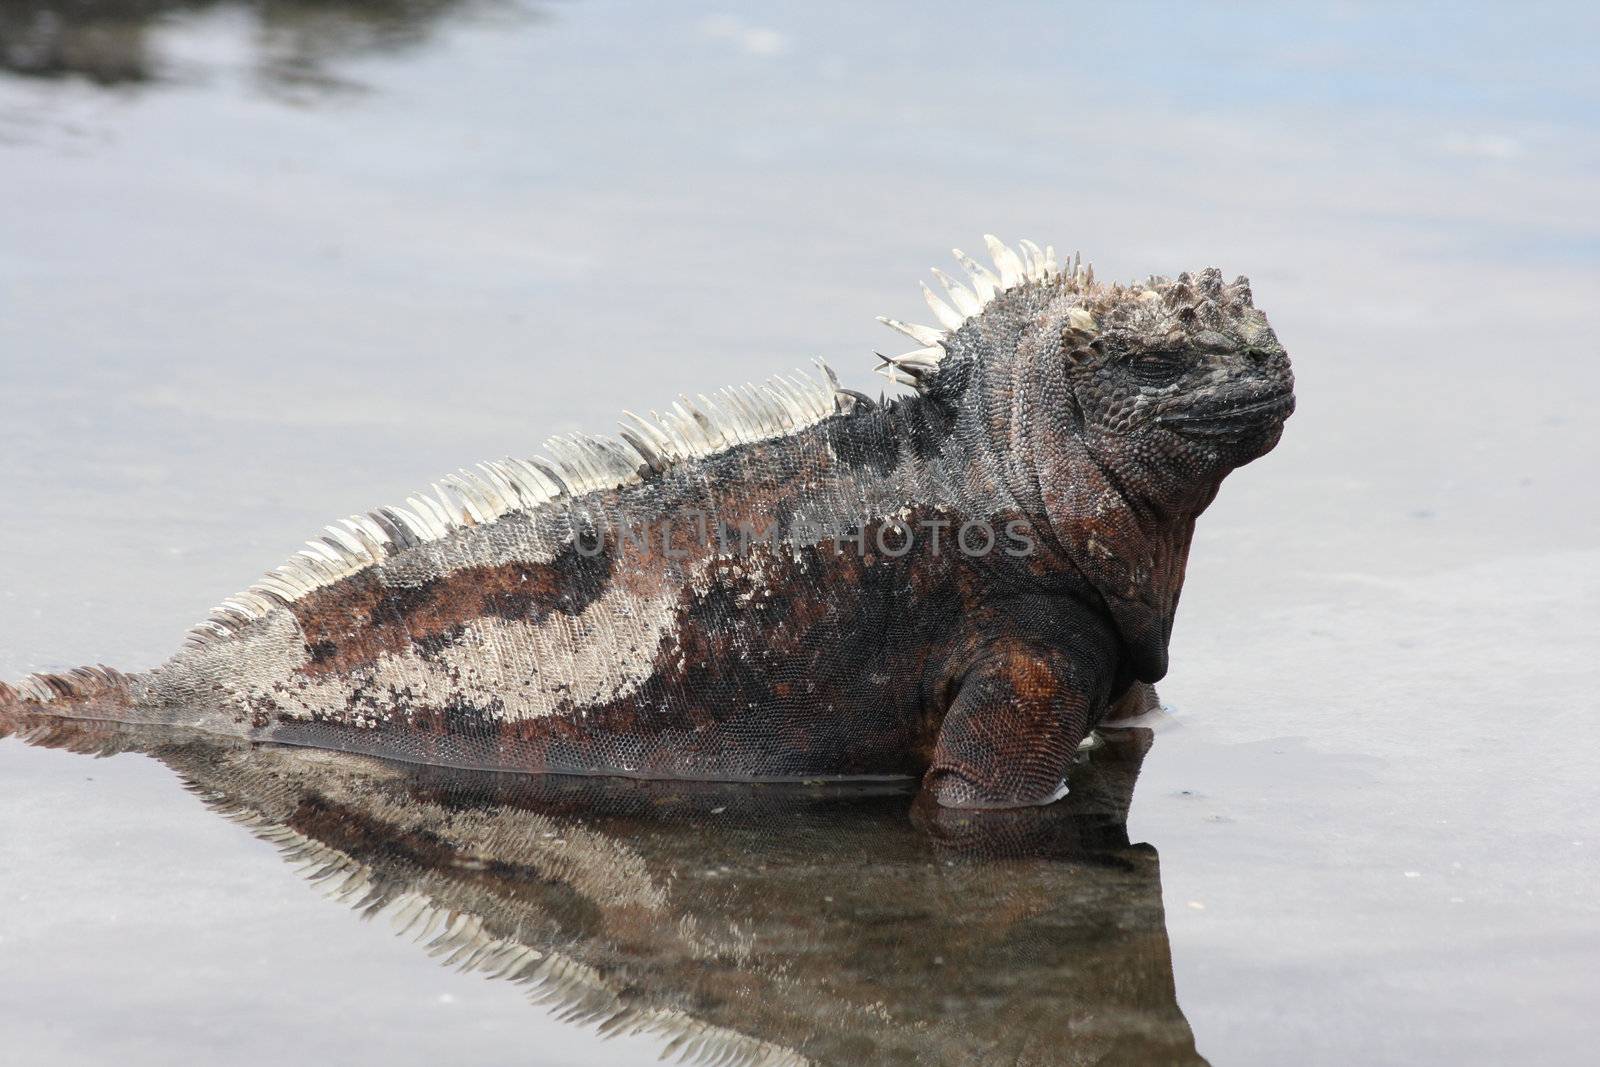 The marine iguana of the Galapagos Islands, Amblyrhynchus cristatus by ernkris